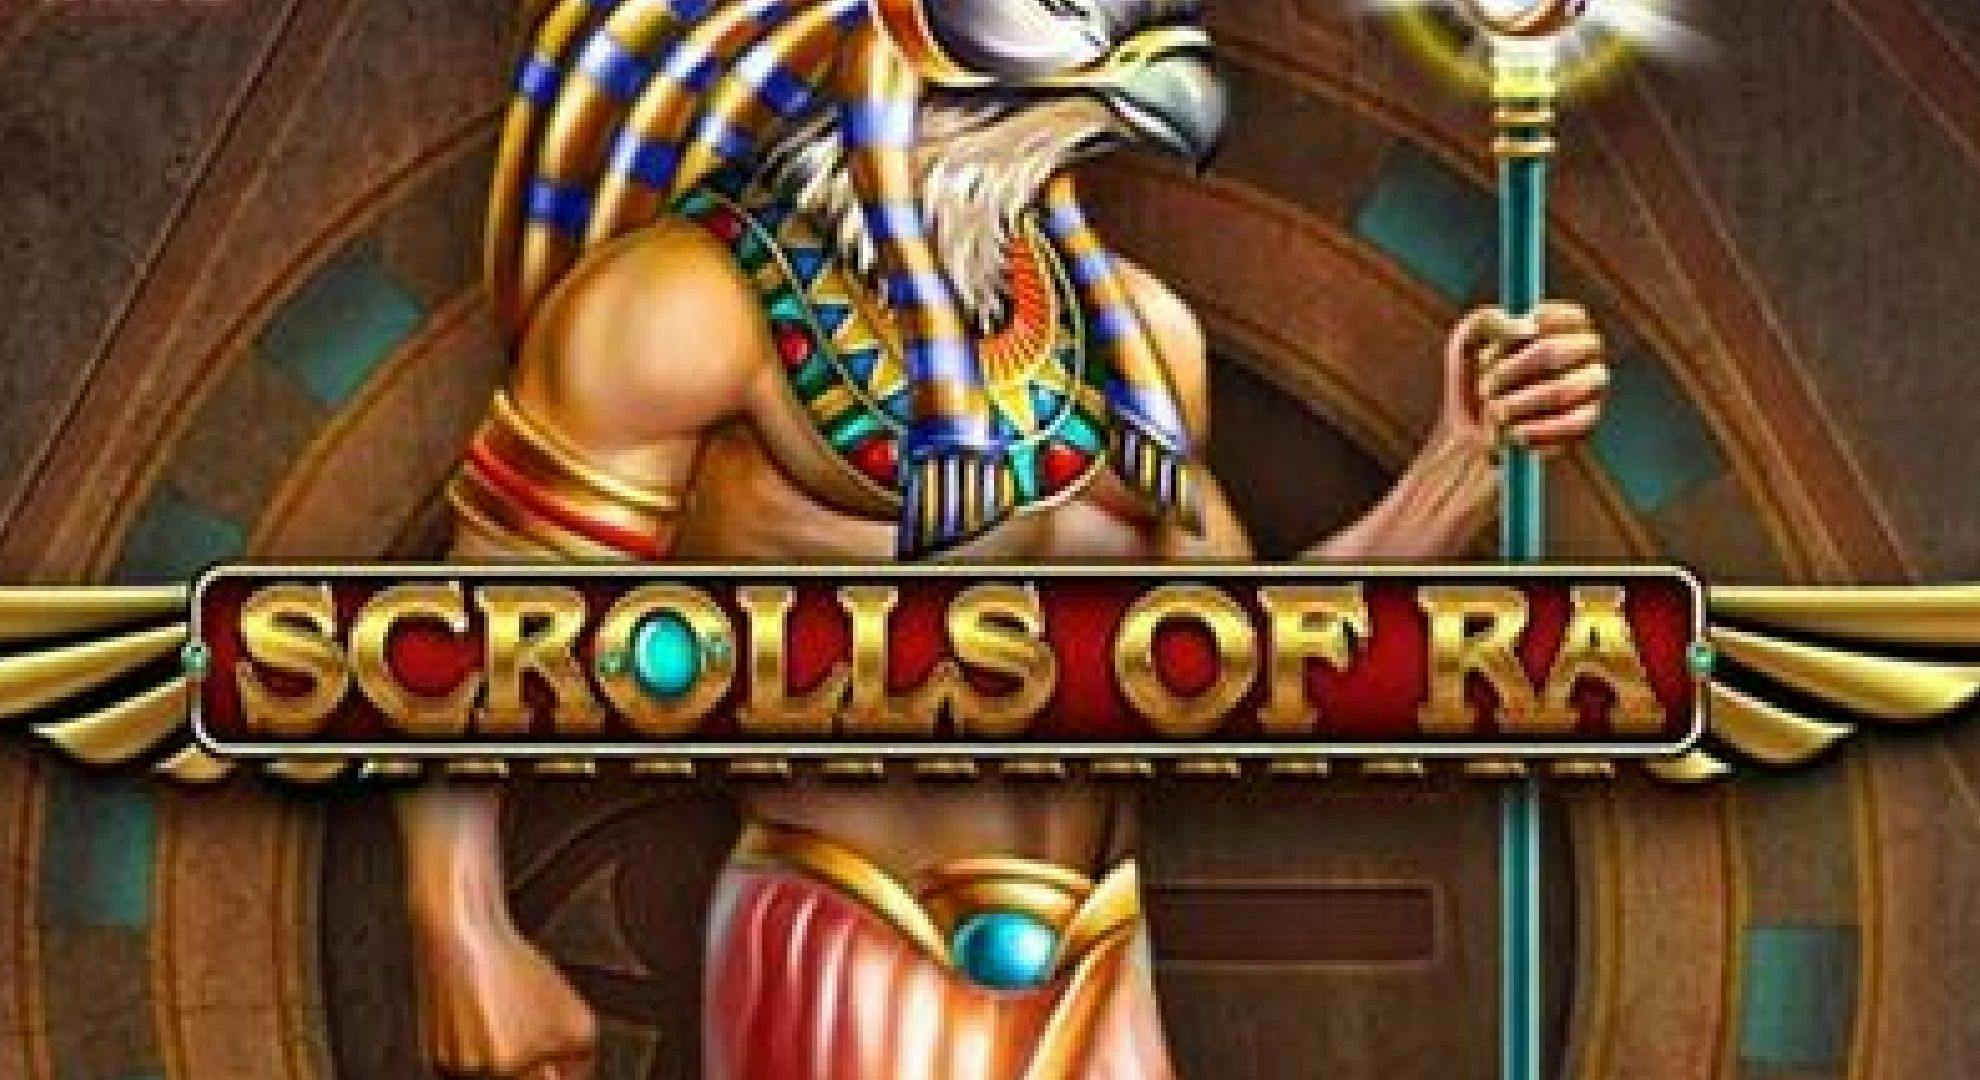 Scrolls of Ra Slot Online Free Play